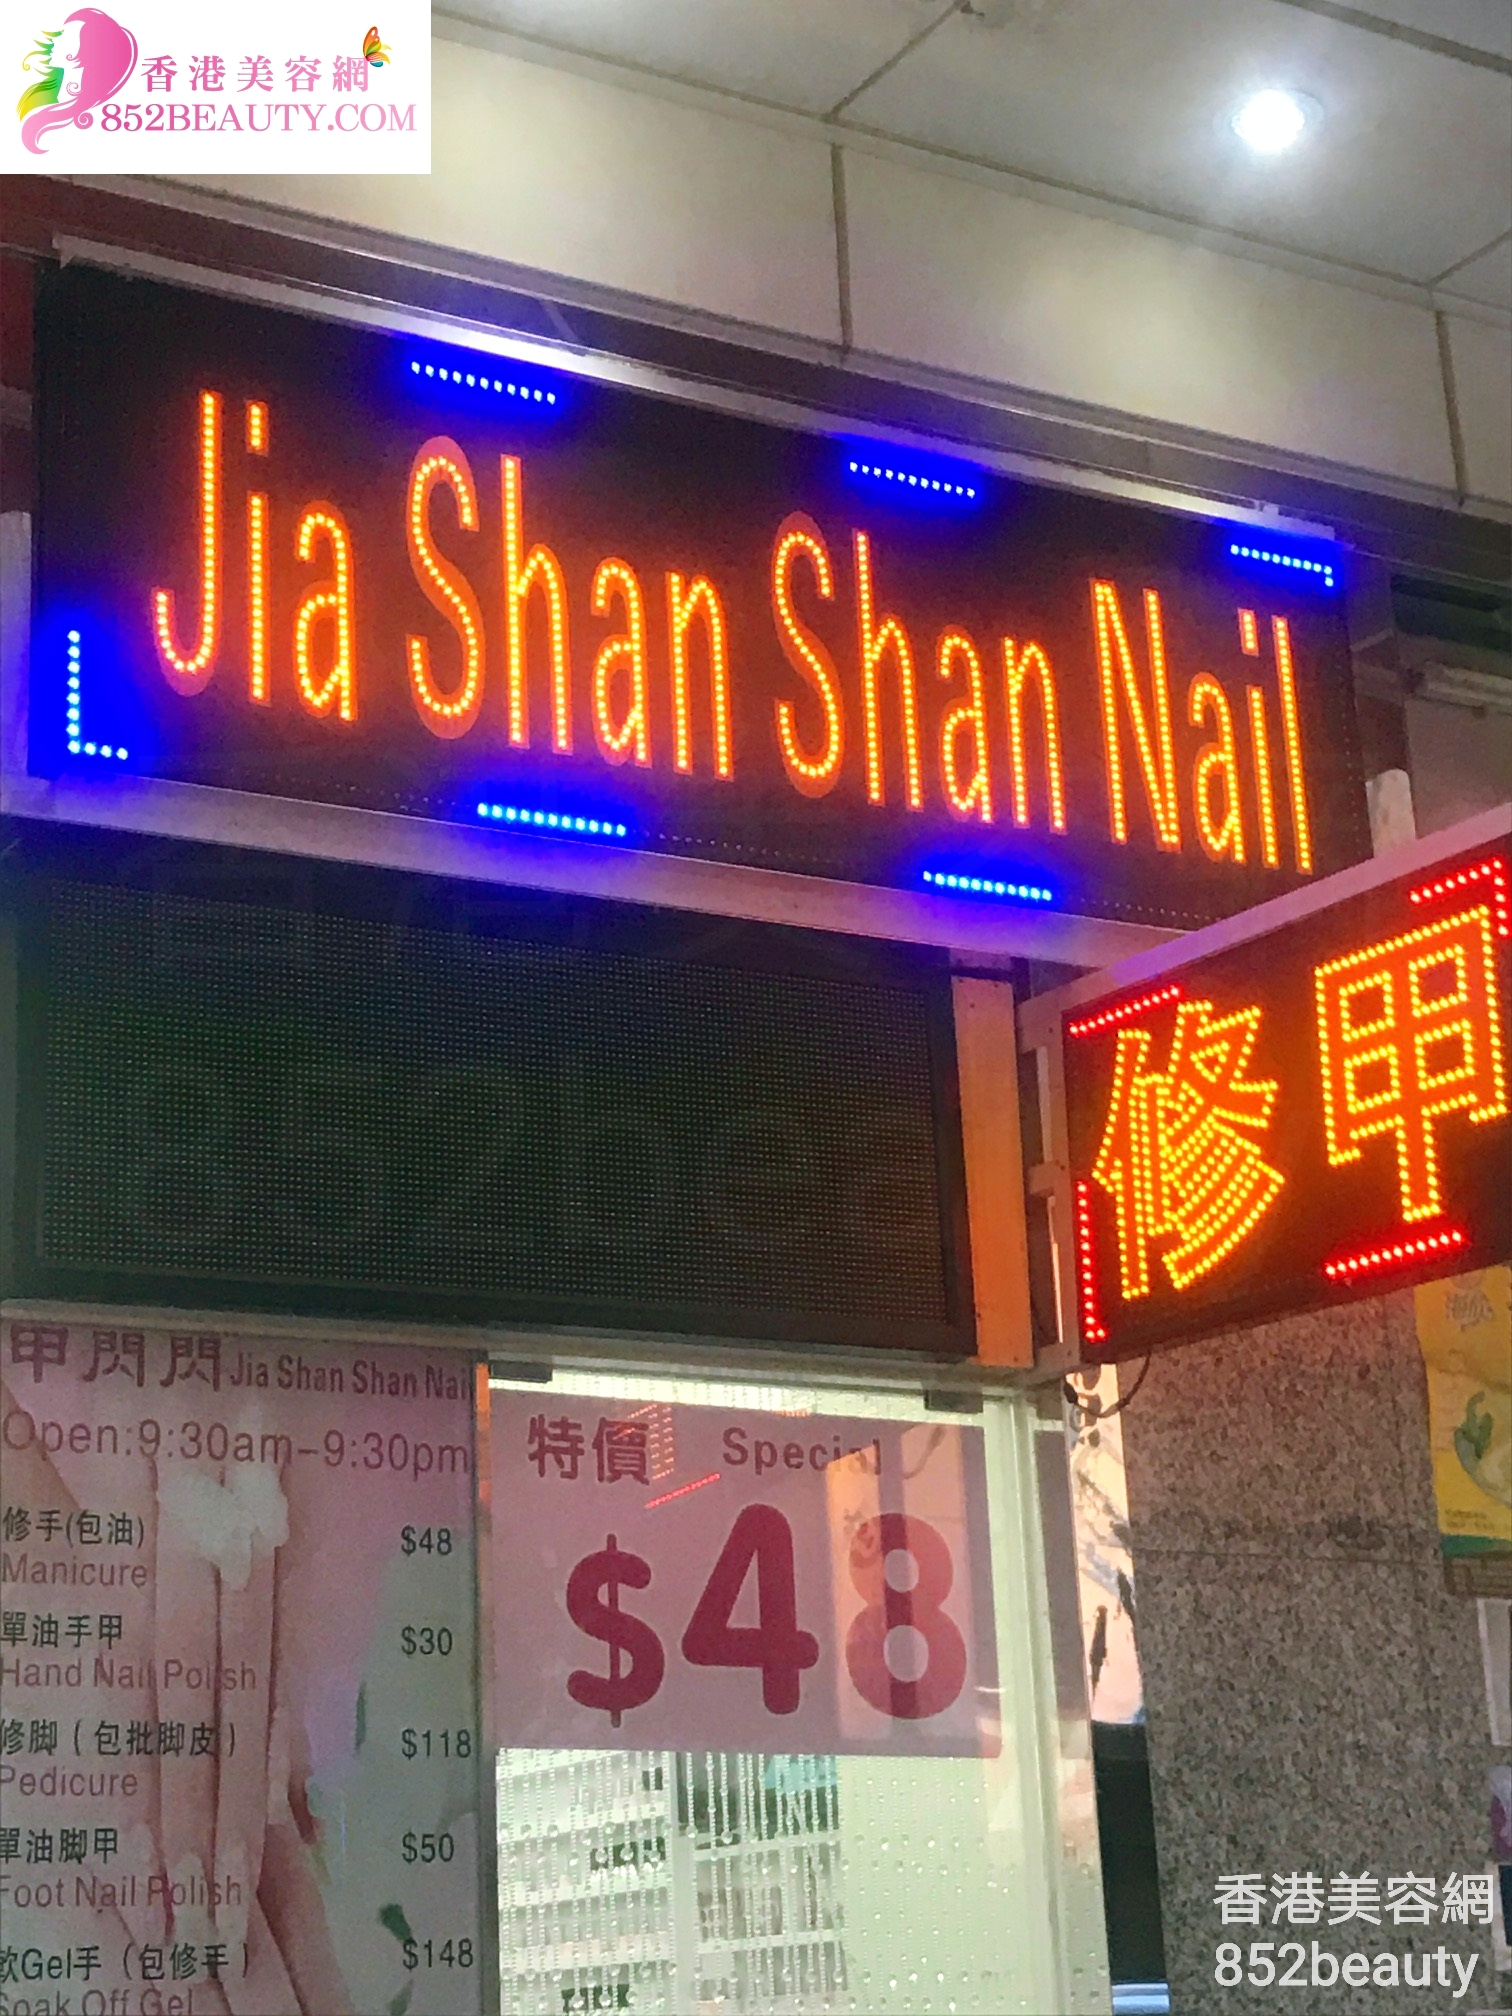 Manicure: Jia Shan Shan Nail